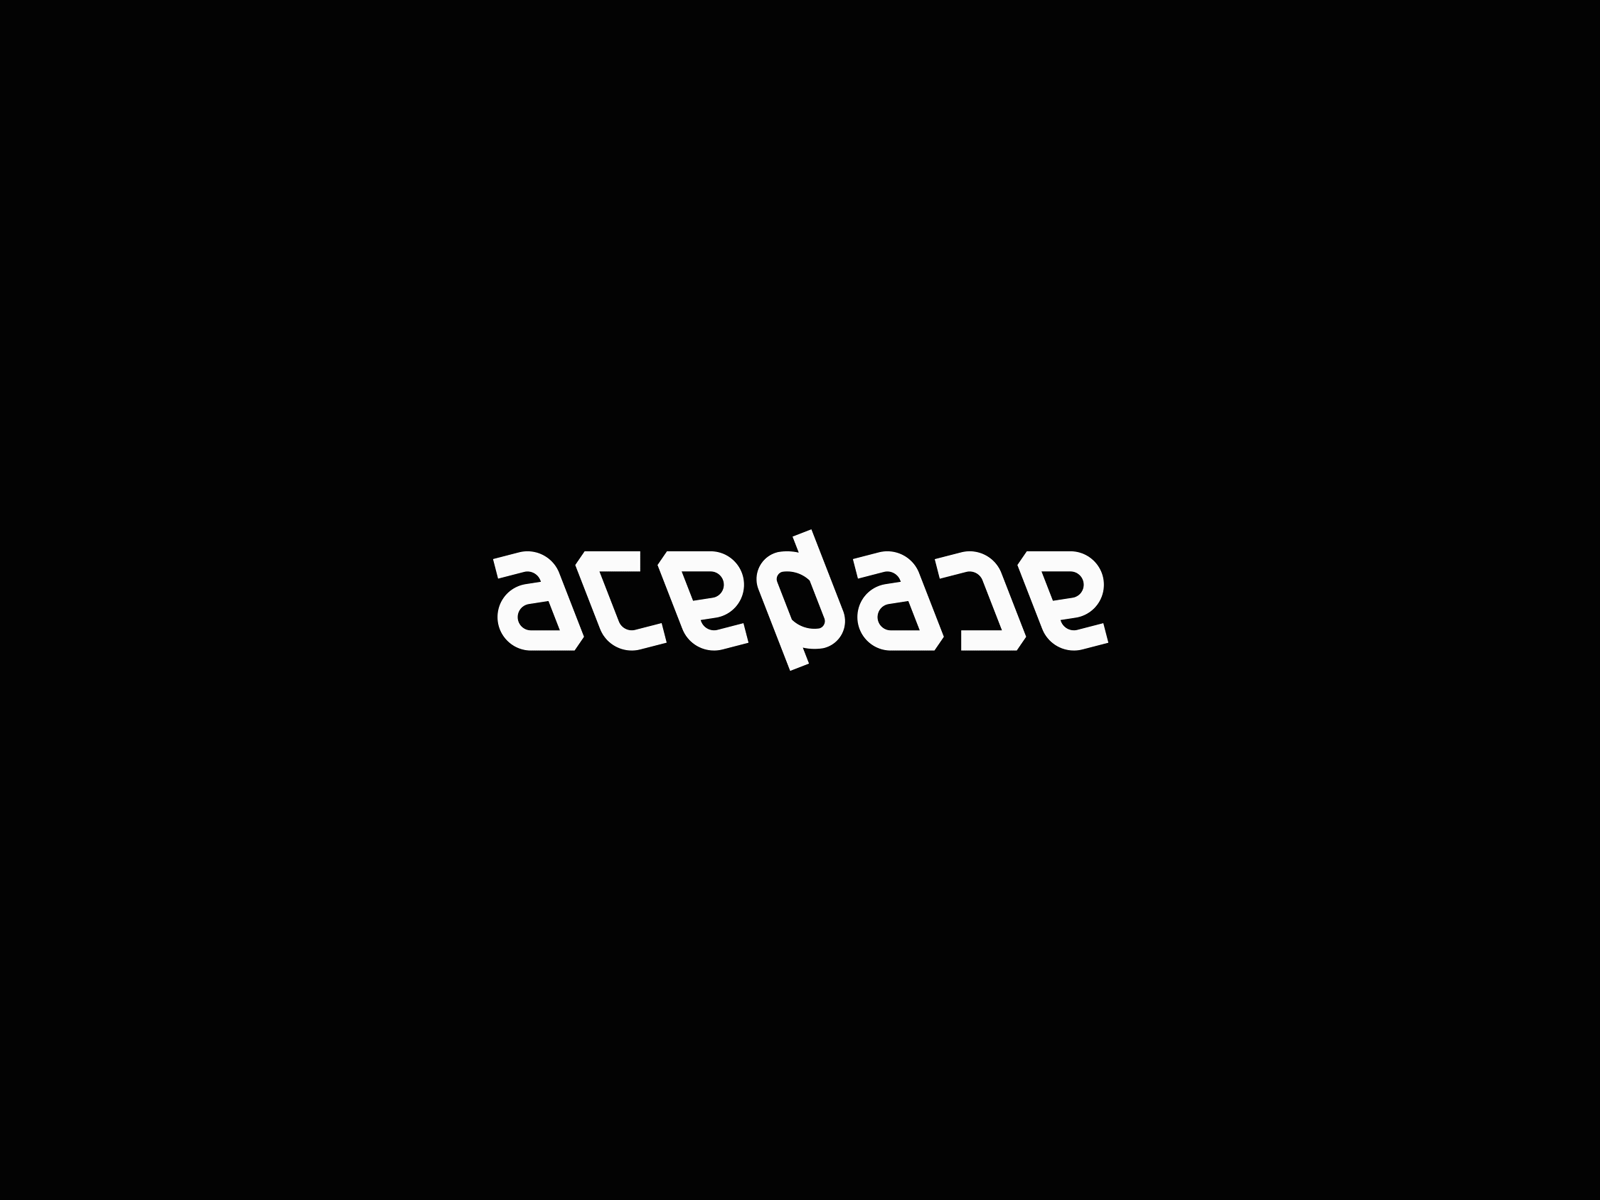 Acepace